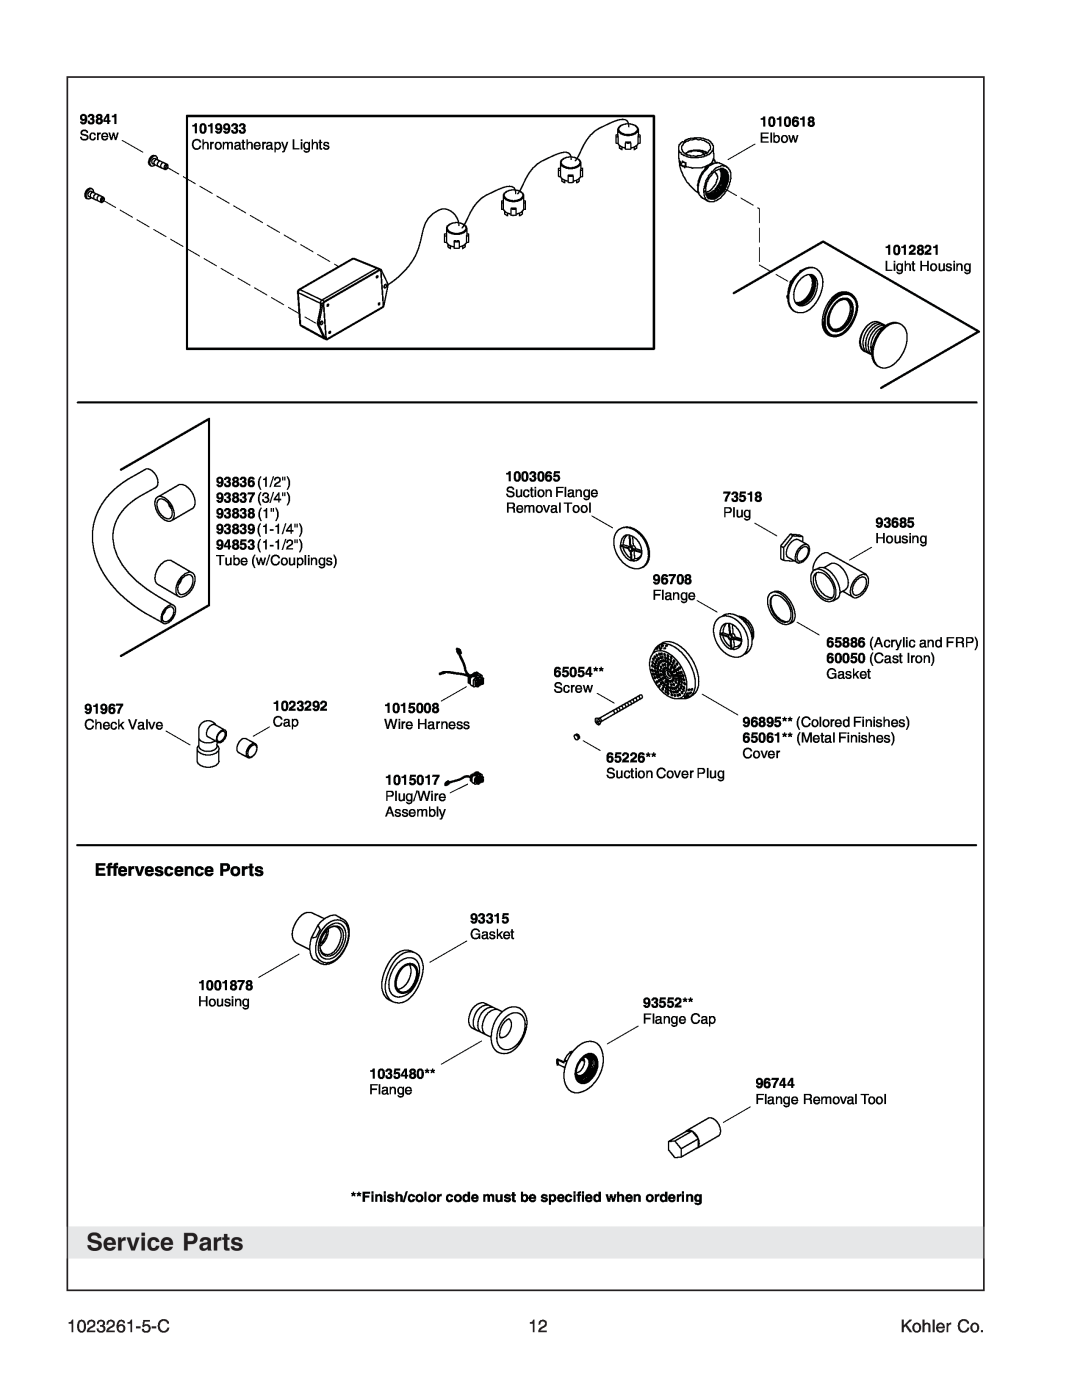 Kohler K-1110-CT manual Service Parts, Effervescence Ports 